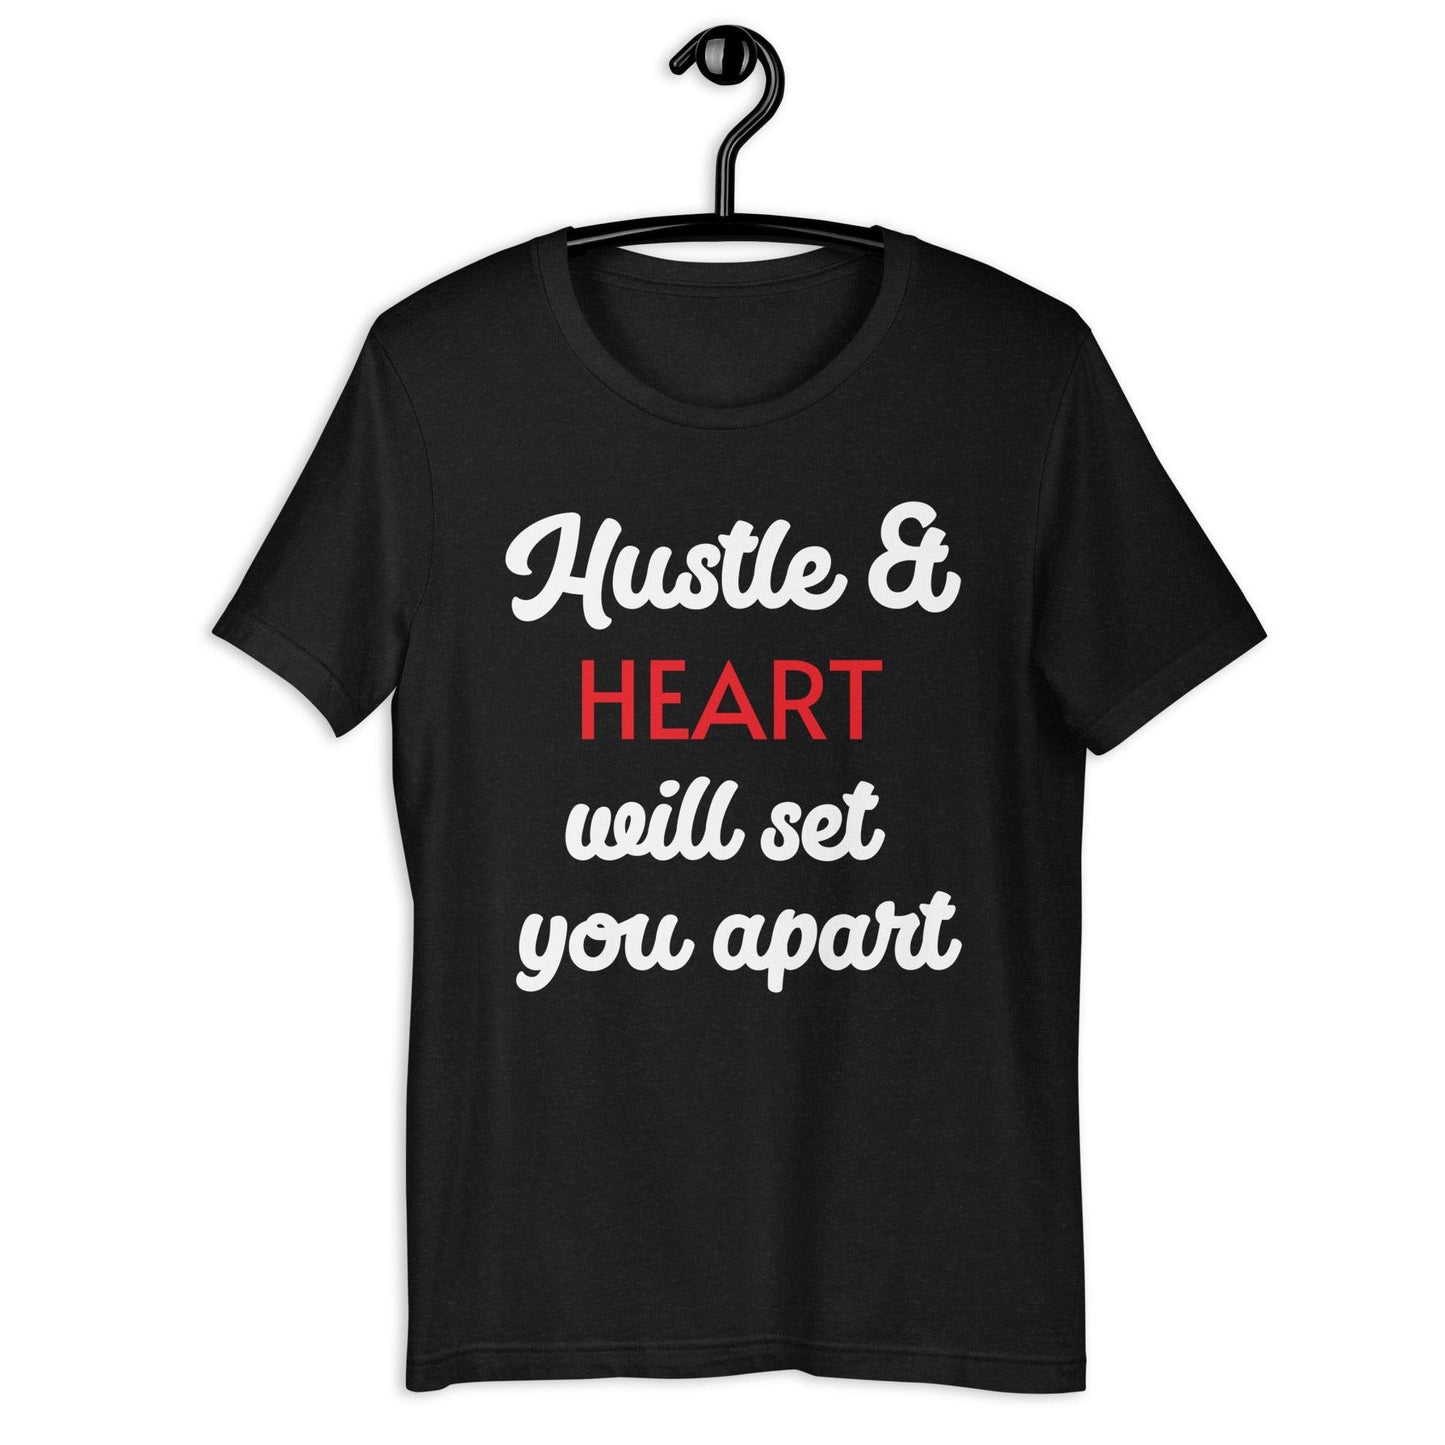 Hustle & Heart Tee